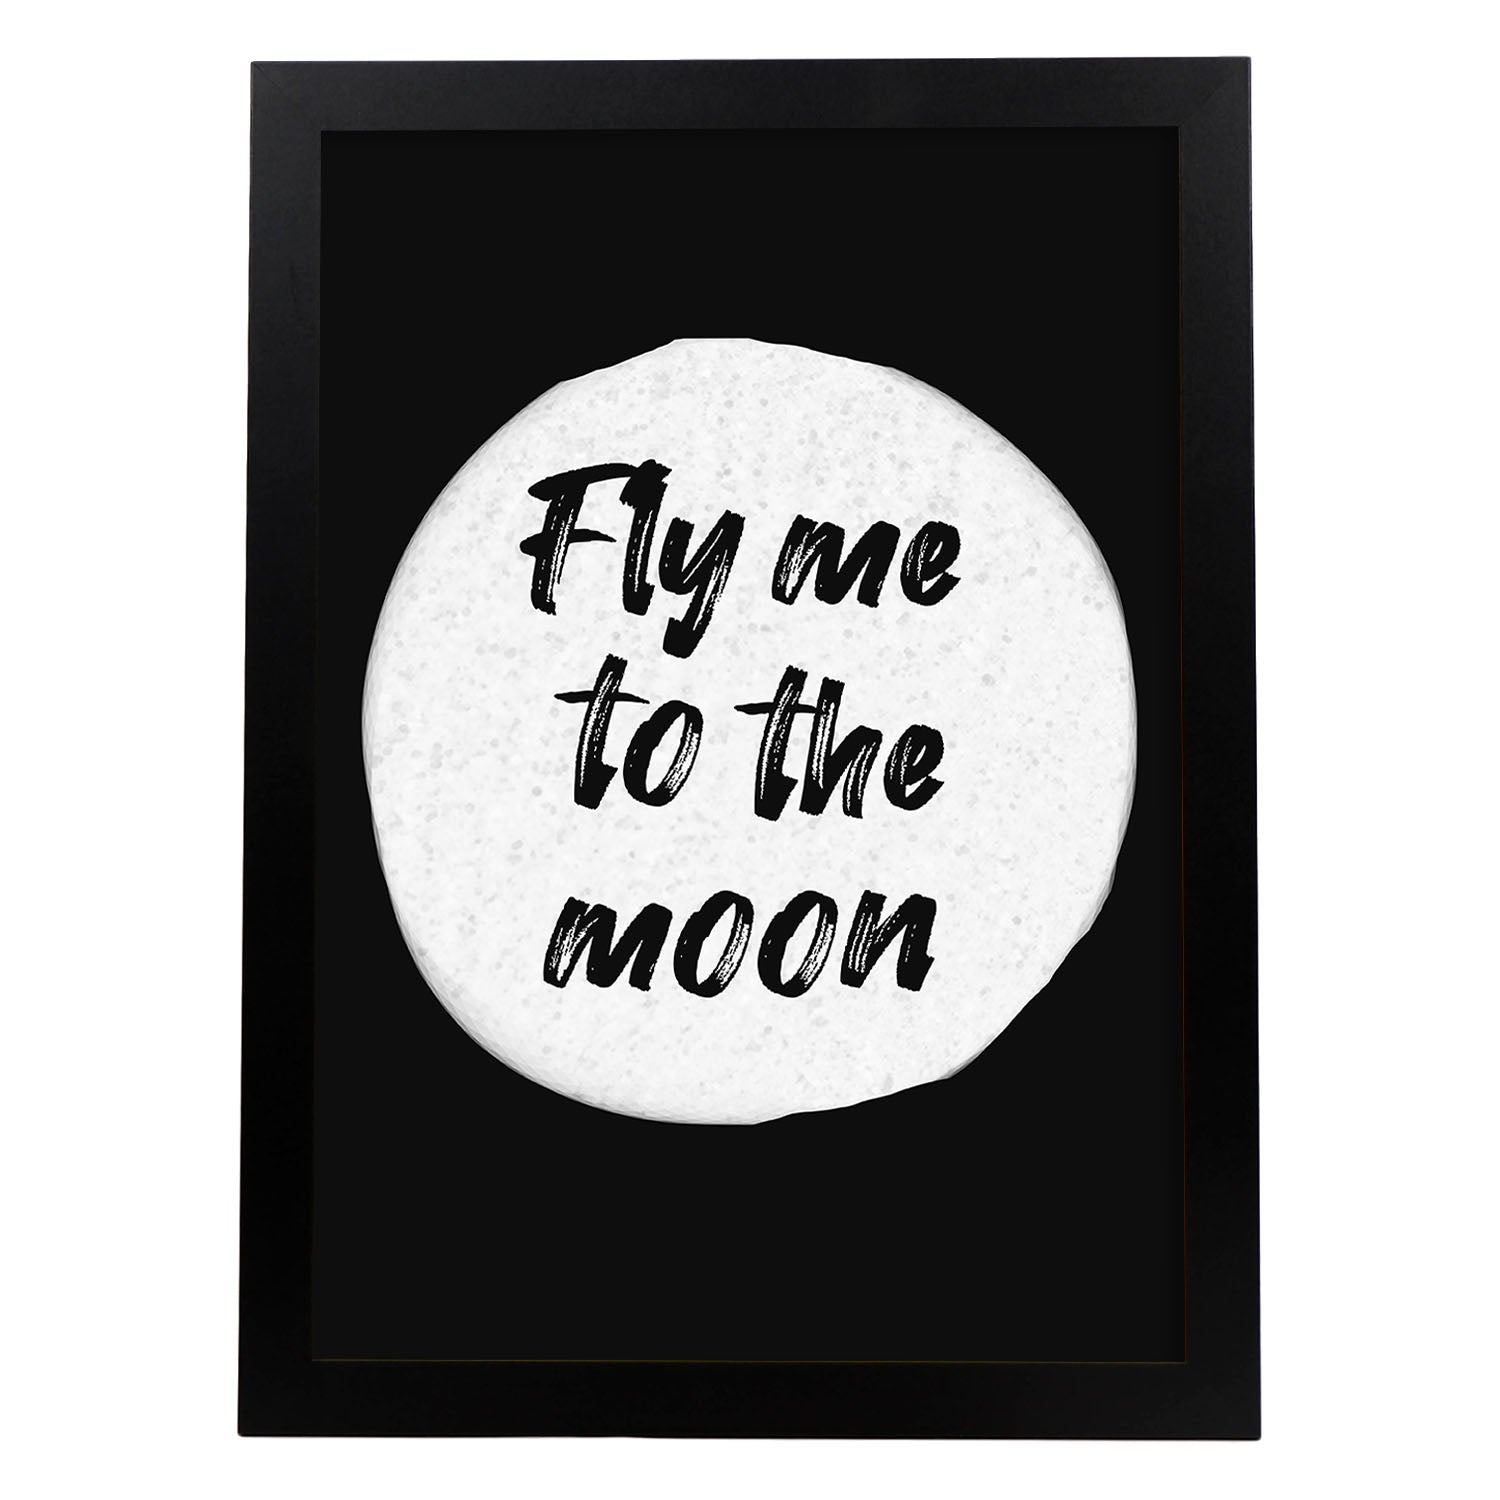 Lamina artistica decorativa con ilustración de fly me to the moon estilo Mensaje inspiracional-Artwork-Nacnic-A3-Marco Negro-Nacnic Estudio SL